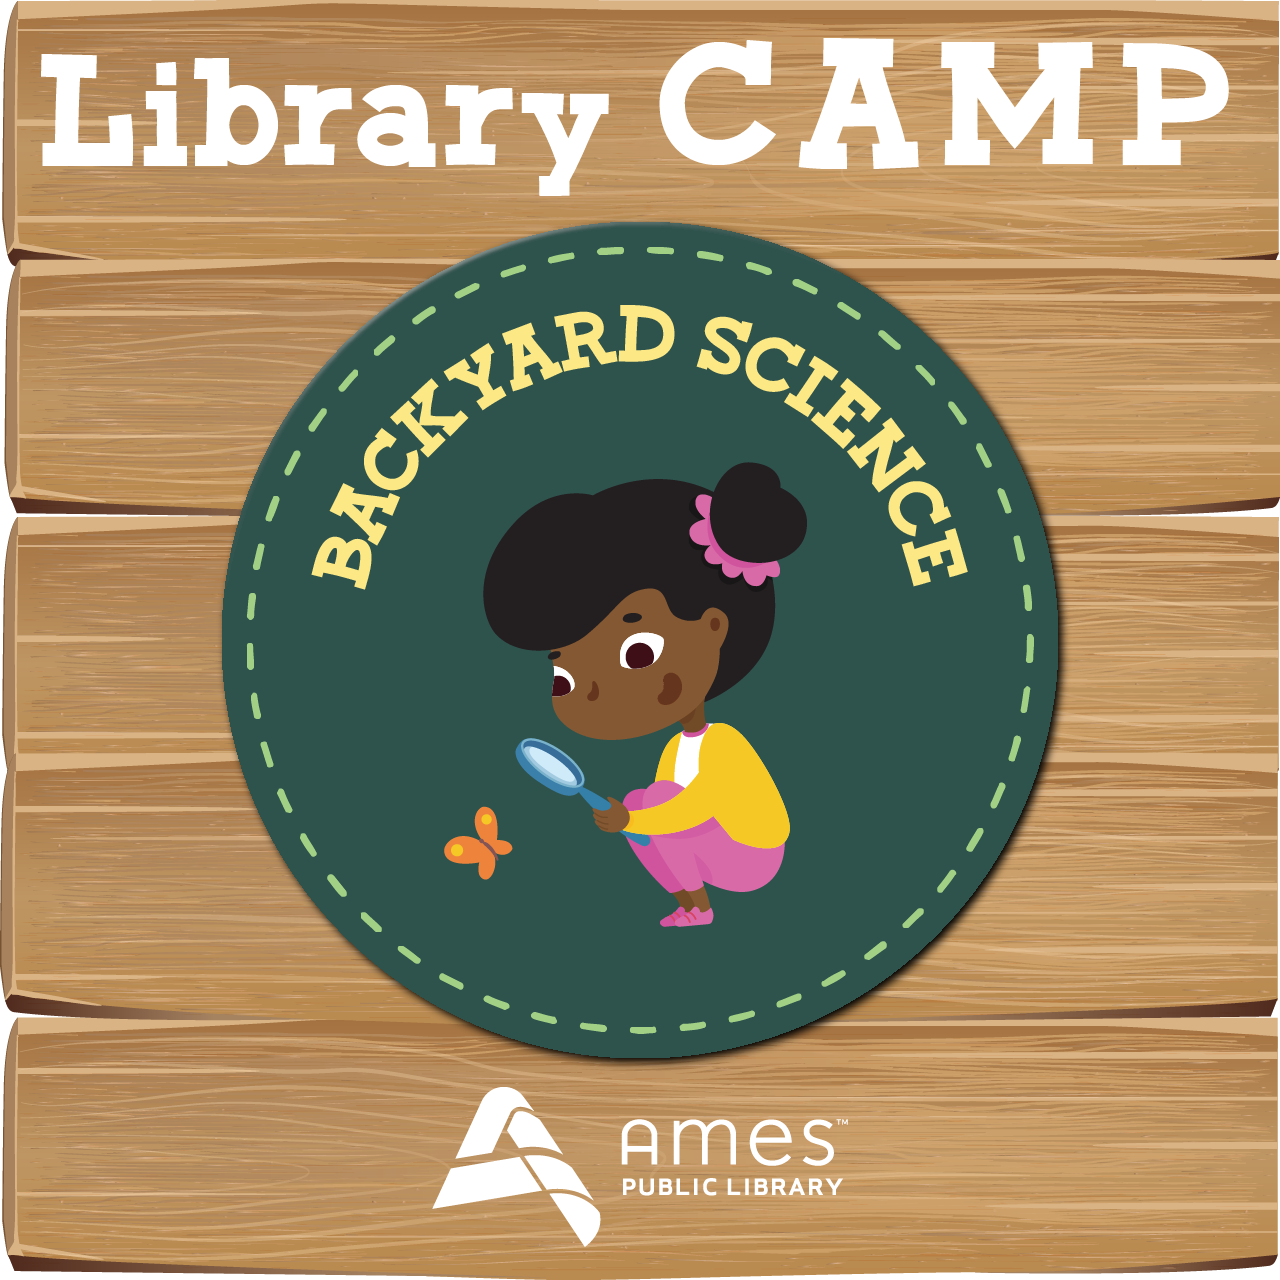 Library Camp: Backyard Science